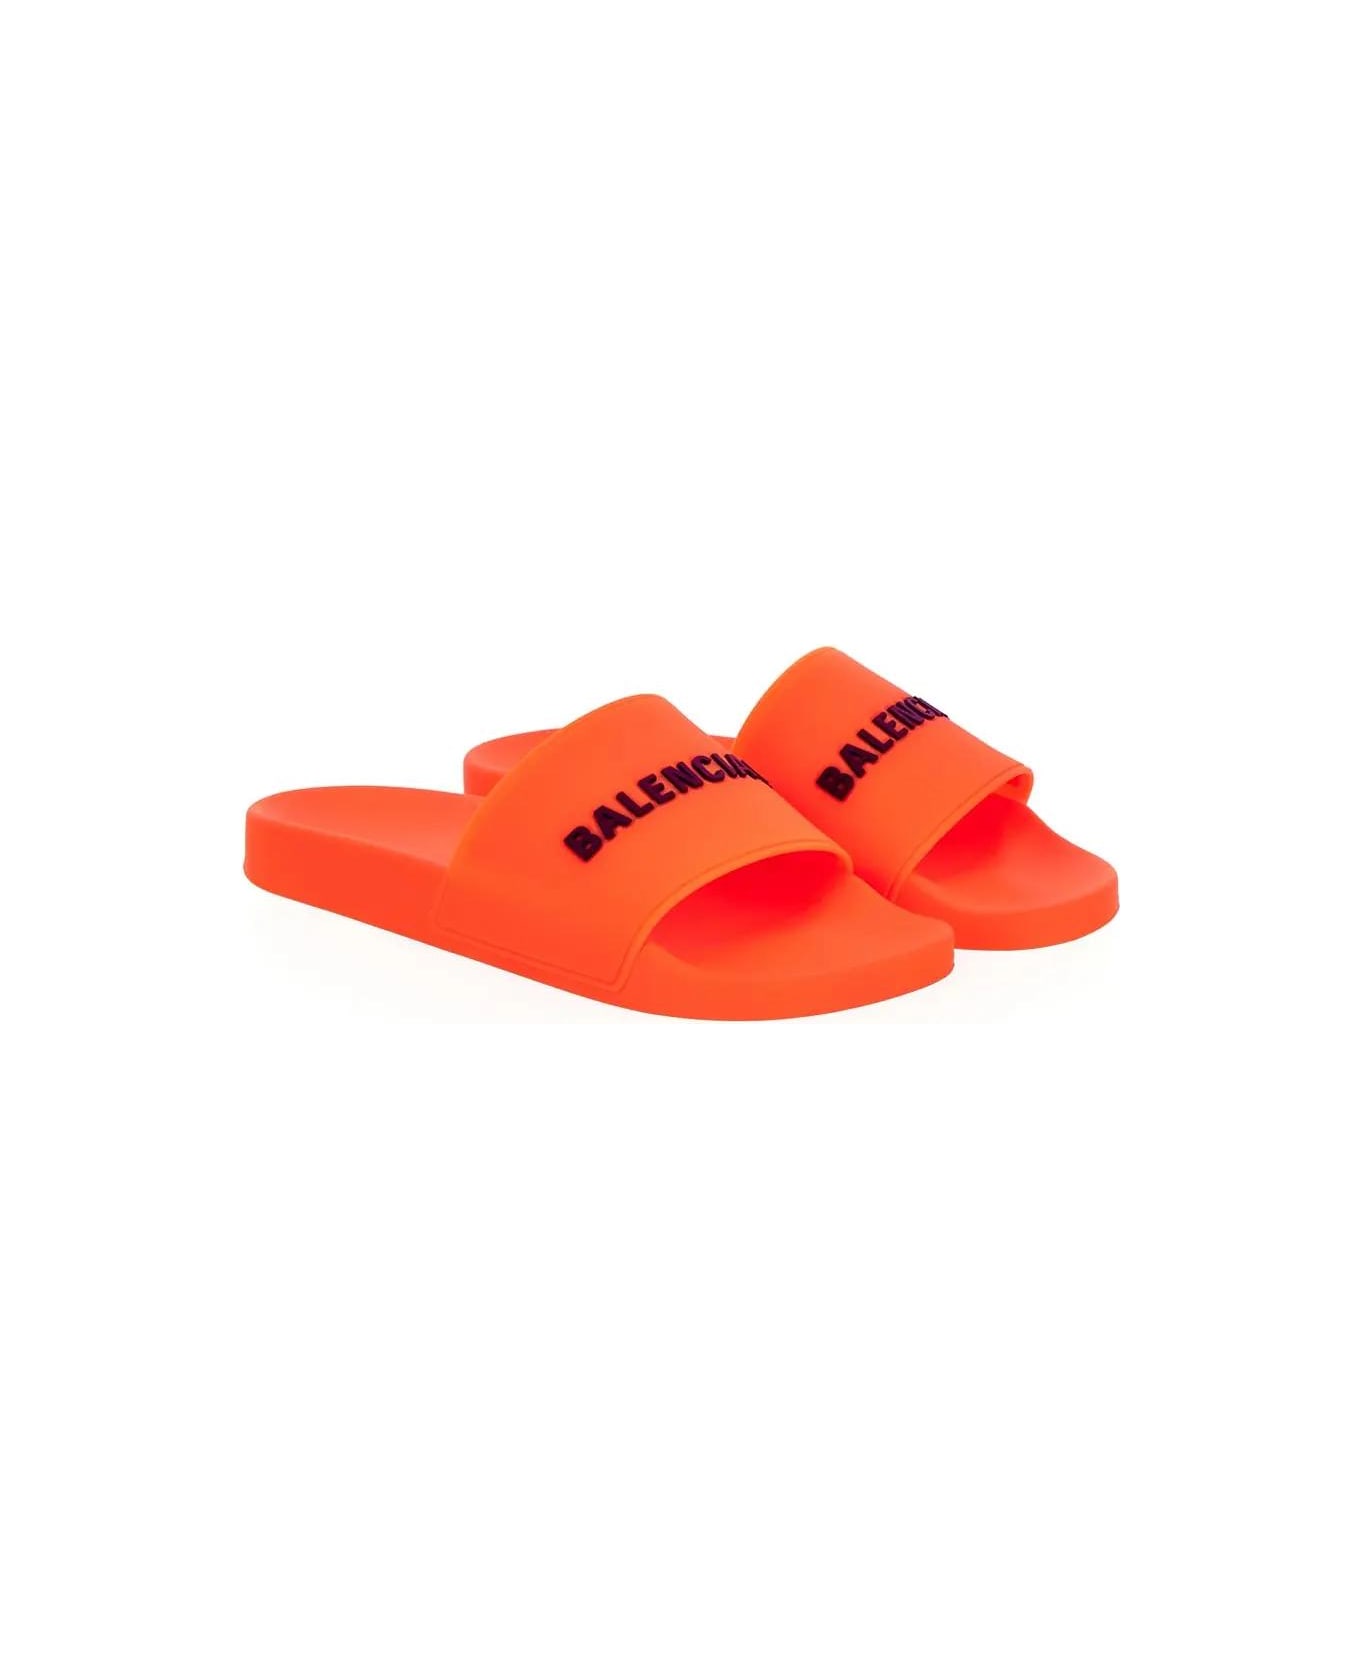 Balenciaga Pool Slide Sandal - Yellow & Orange